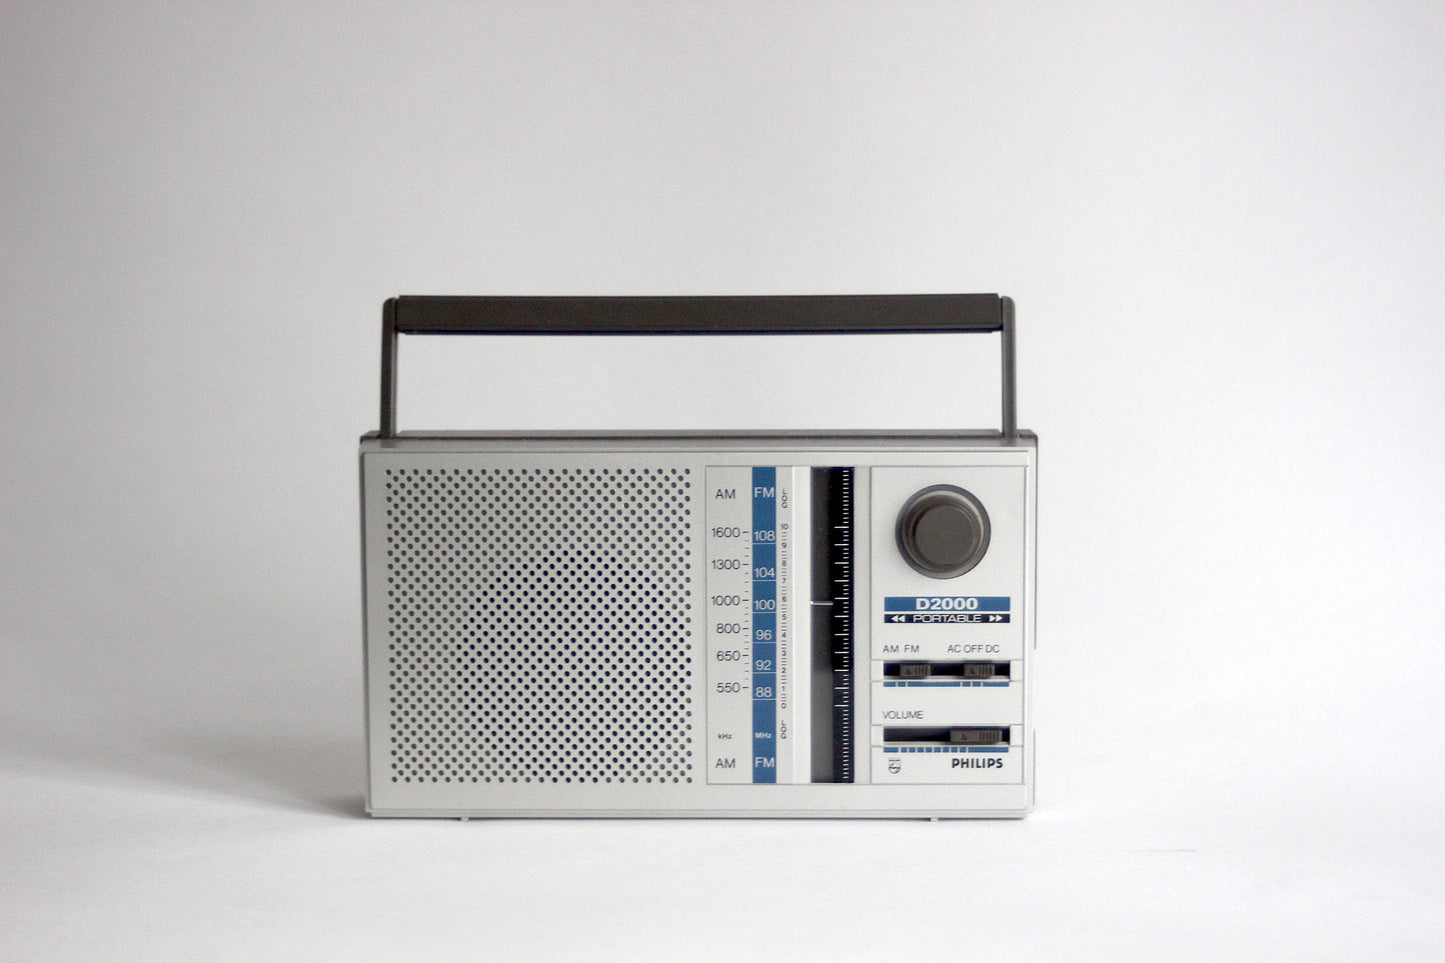 Small PHILIPS D2000 portable radio. Austria 1980s